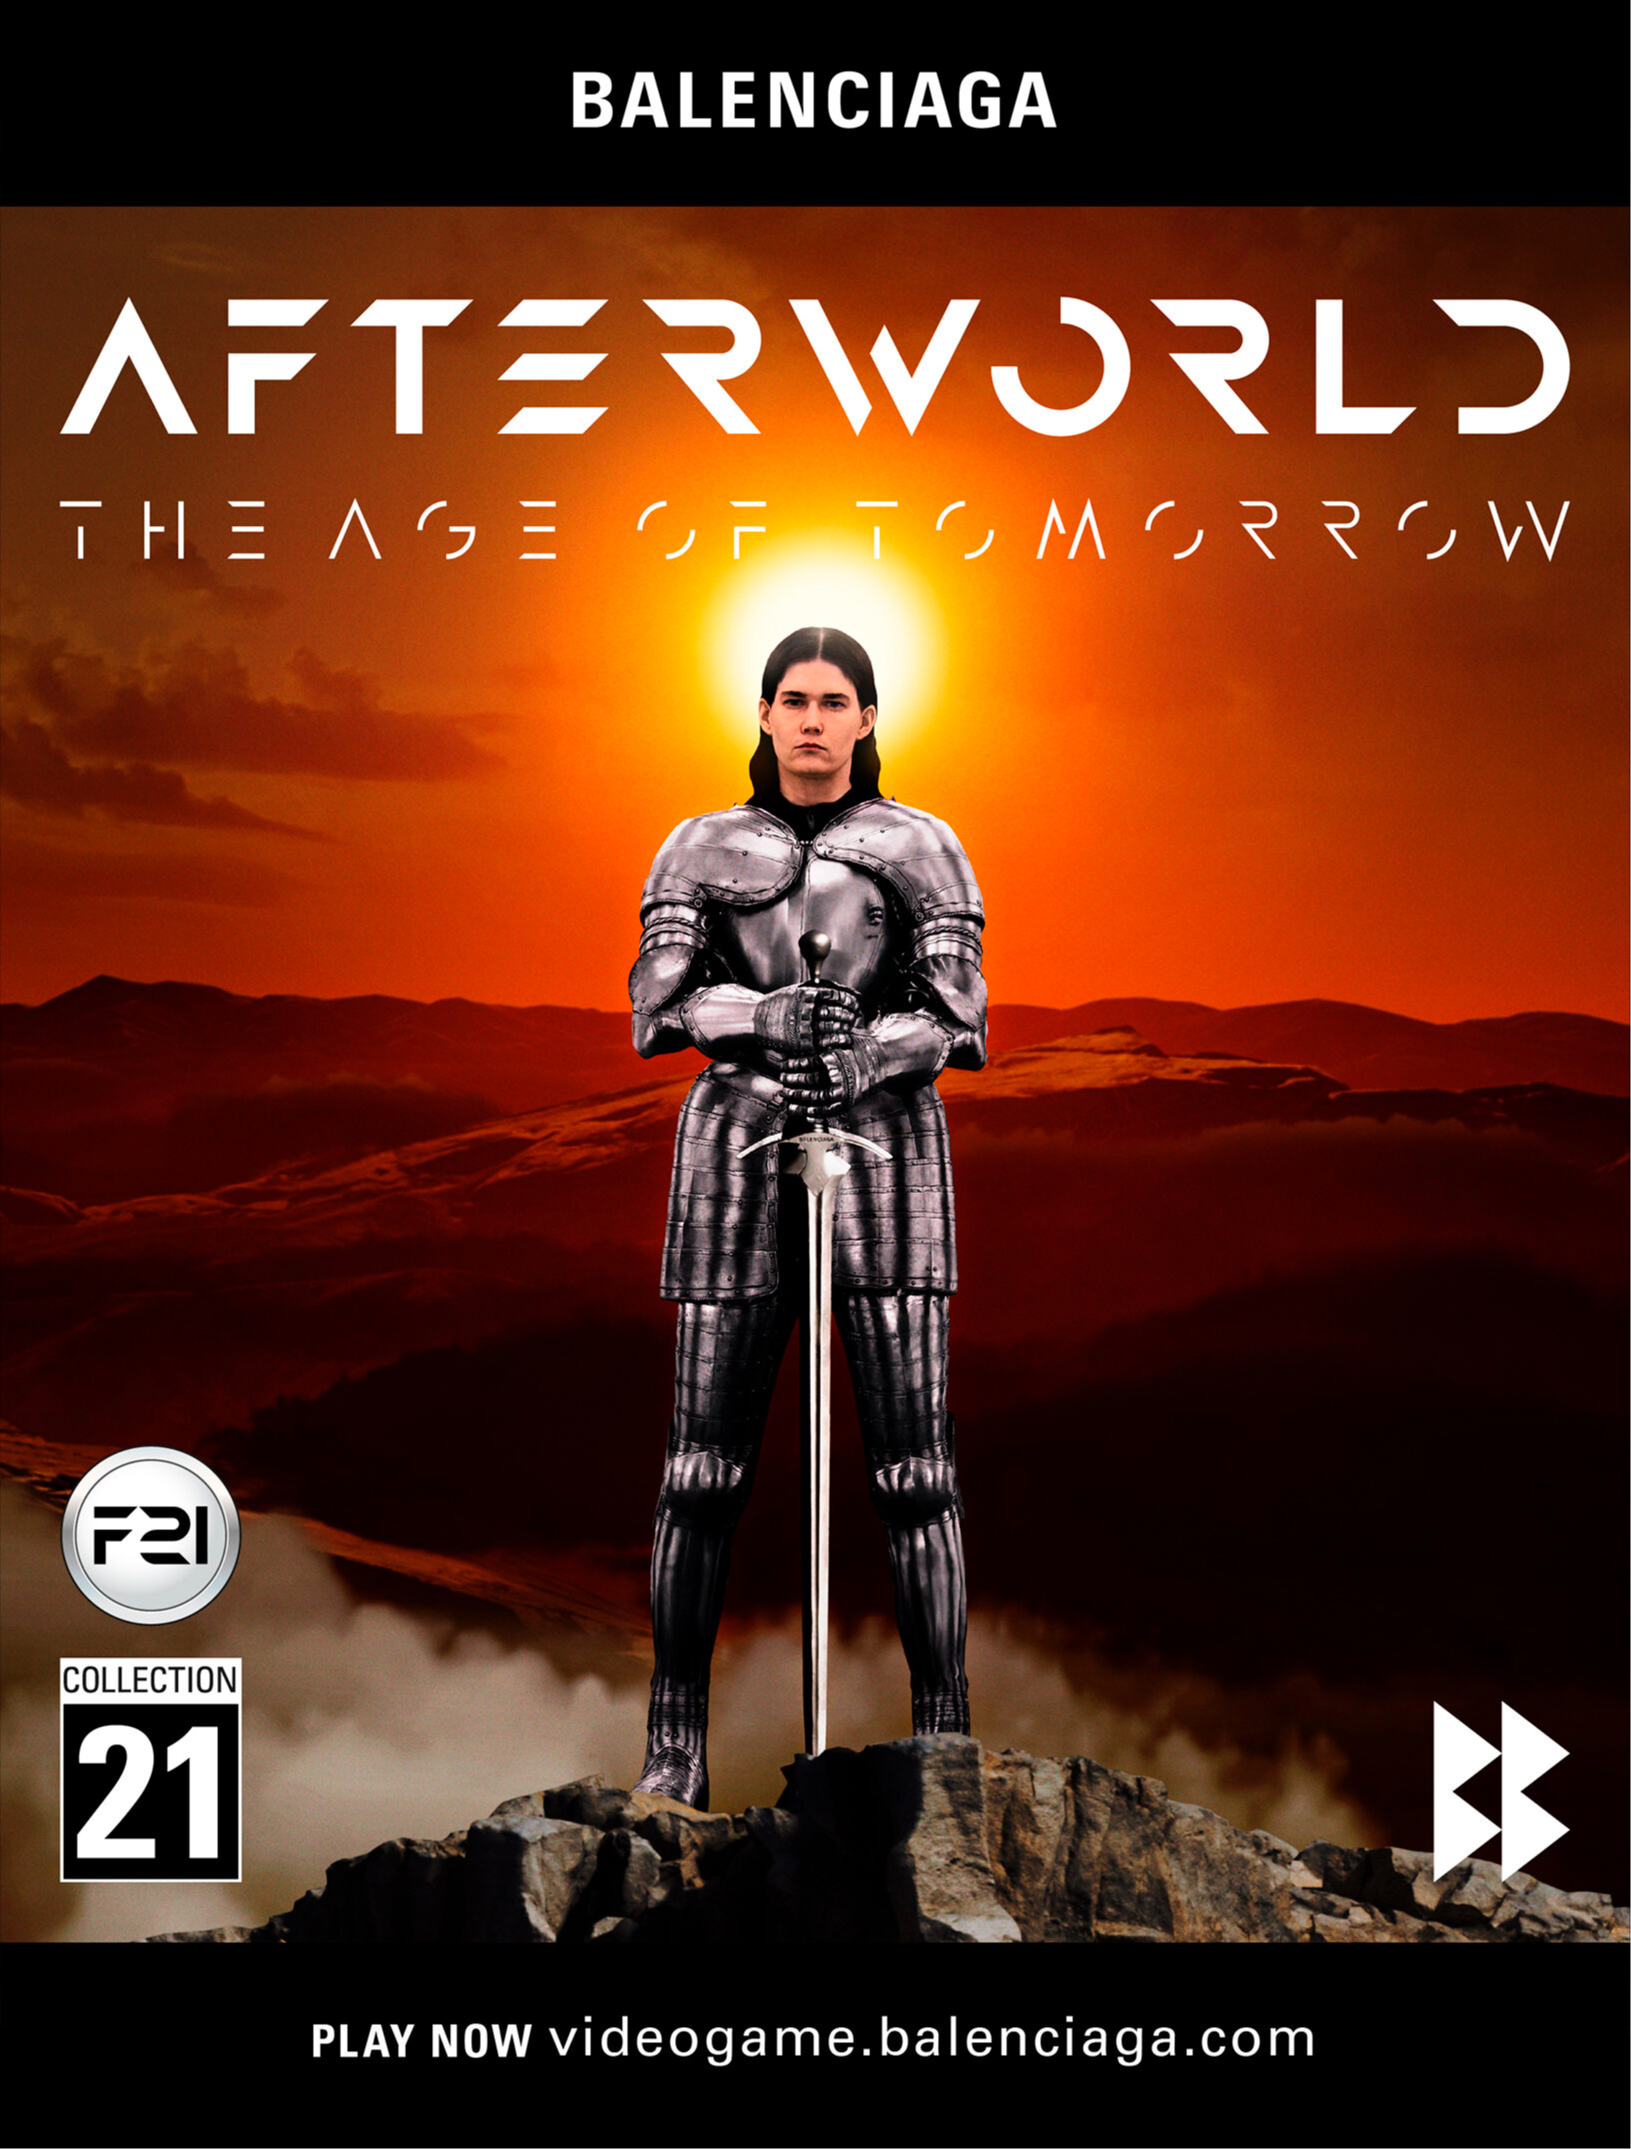 Обложка видеоигры&nbsp;&laquo;Afterworld: The Age of Tomorrow&raquo; от Balenciaga